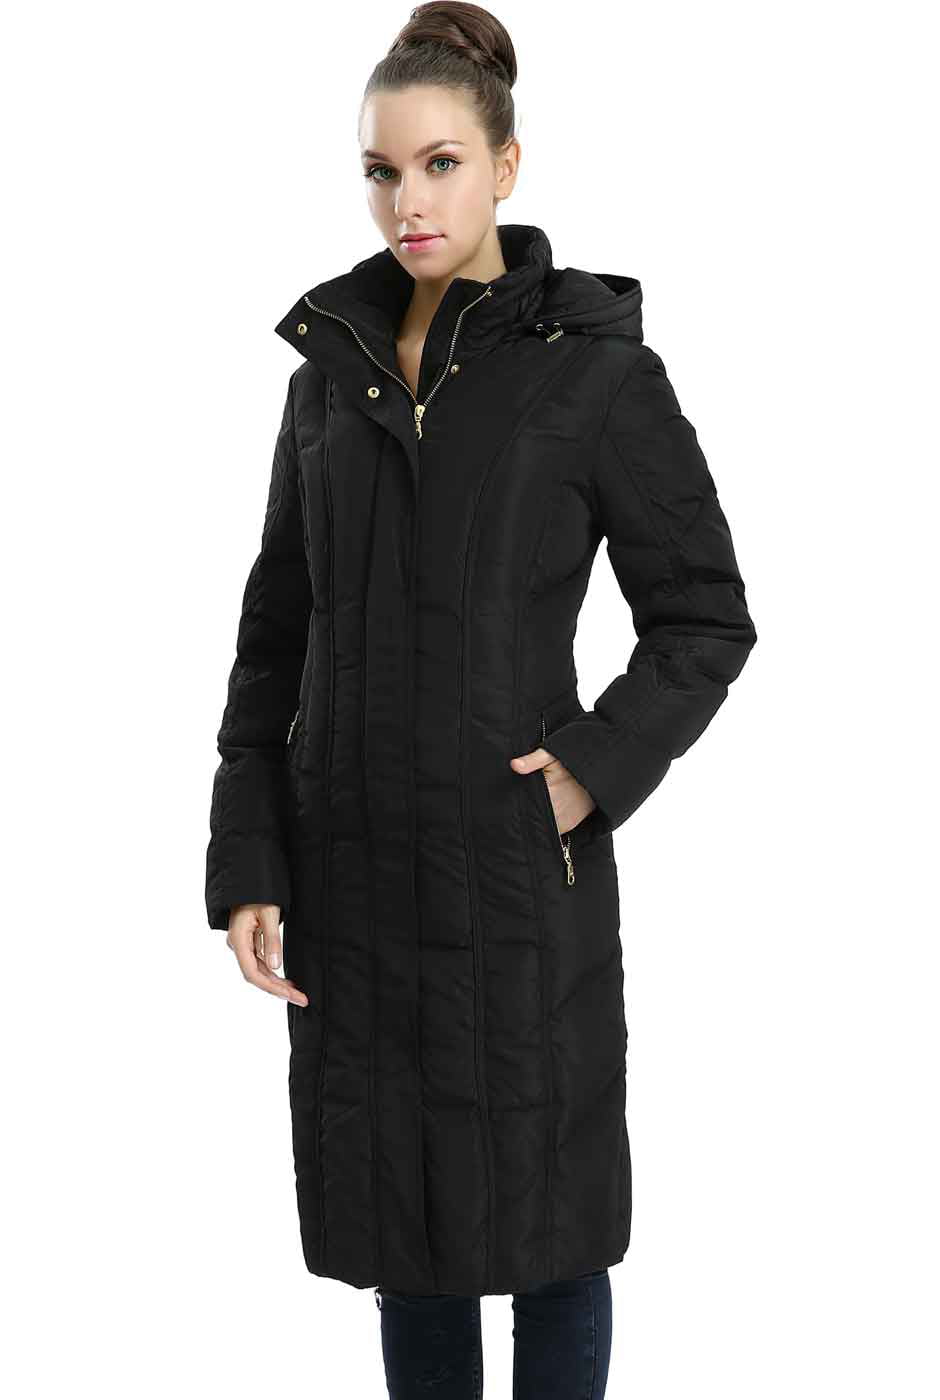 BGSD Women's Cherie Waterproof Puffer Parka Coat Regular and Plus Size 